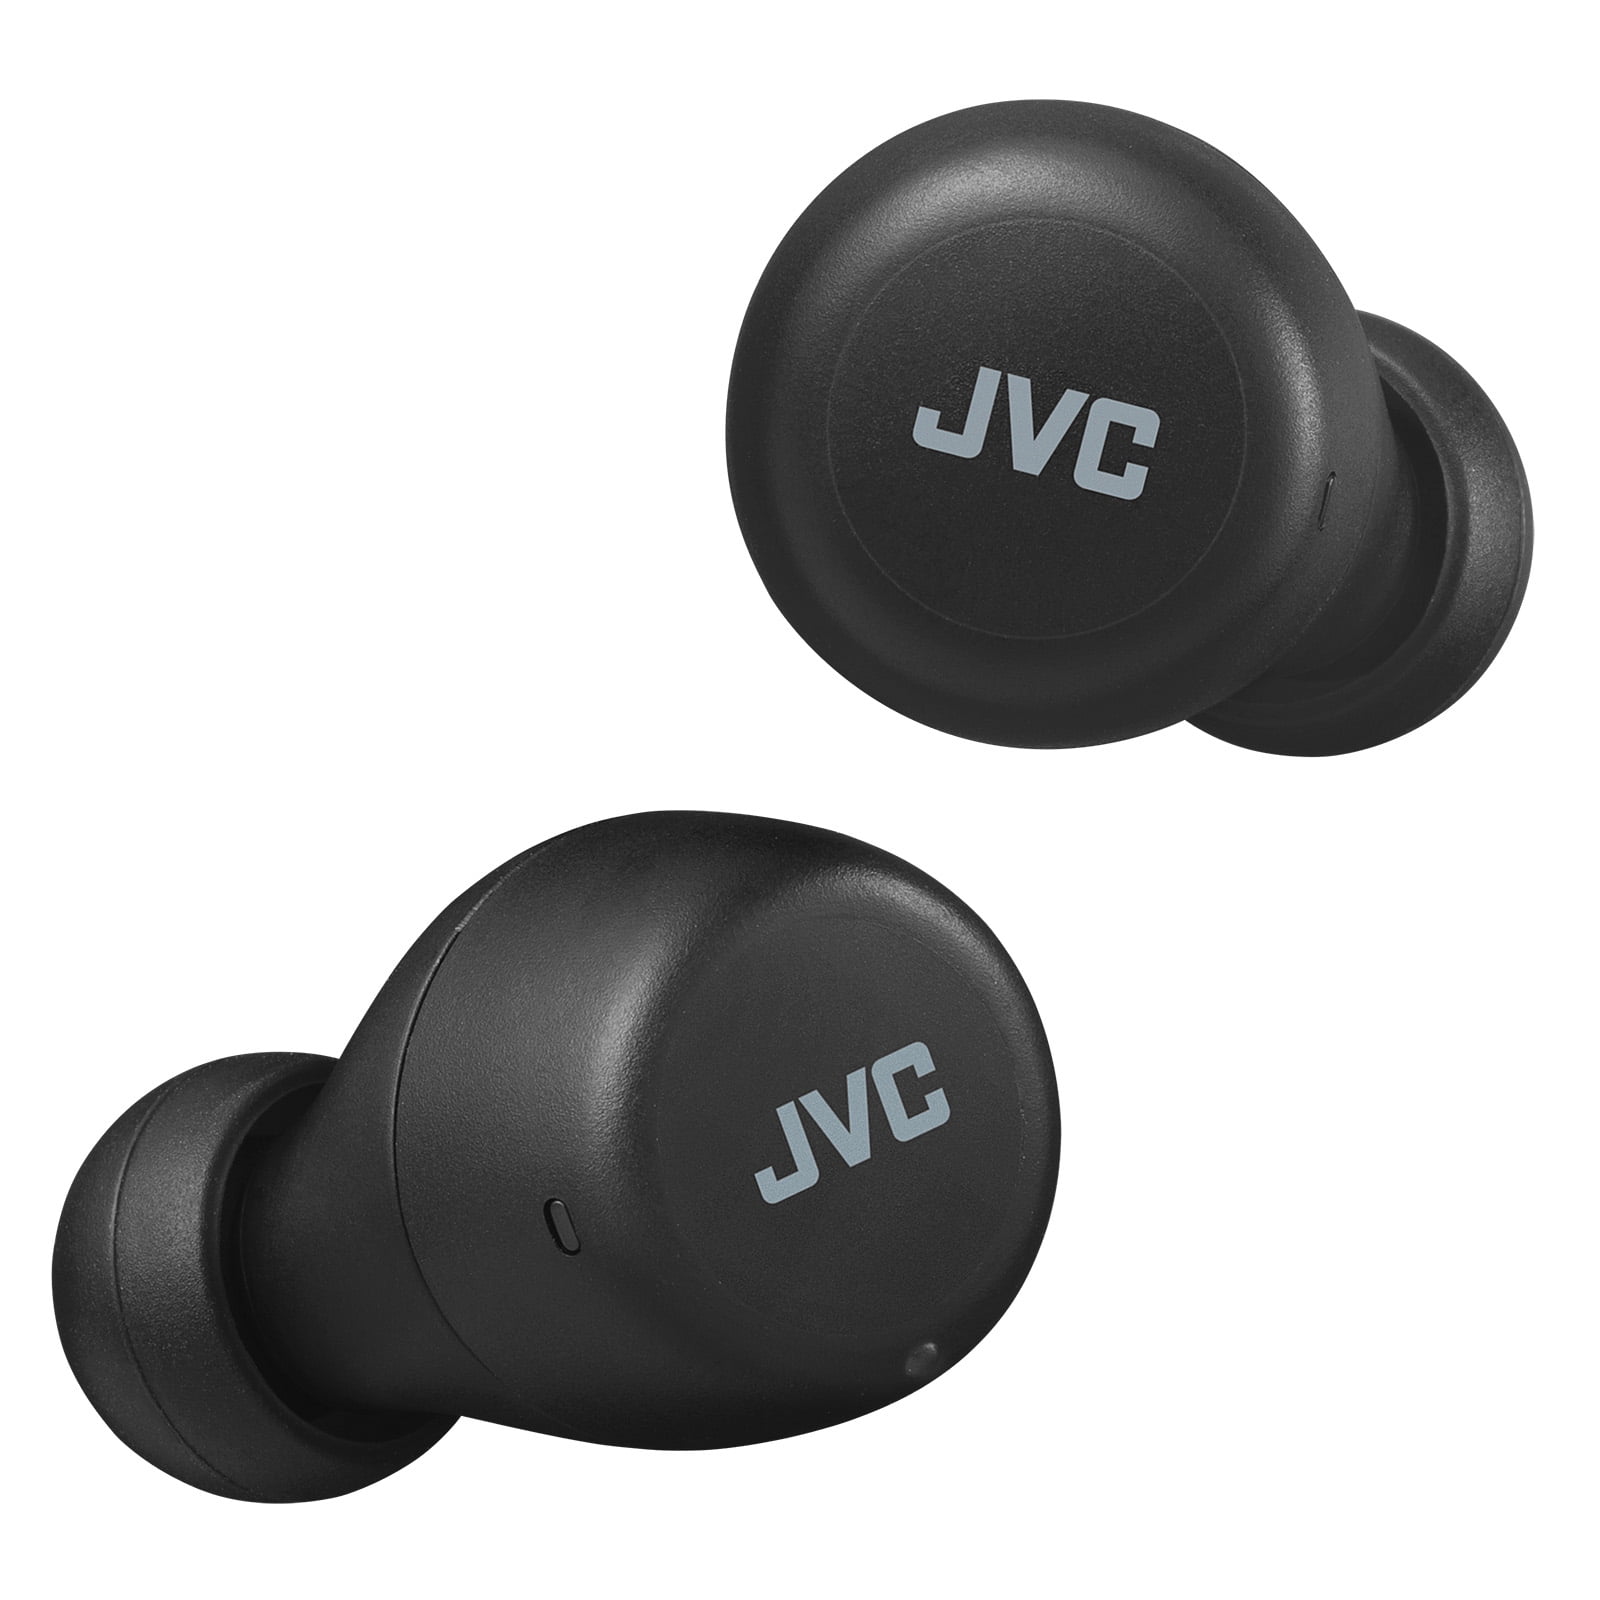  JVC Truly Wireless Earbuds Headphones, Bluetooth 5.0